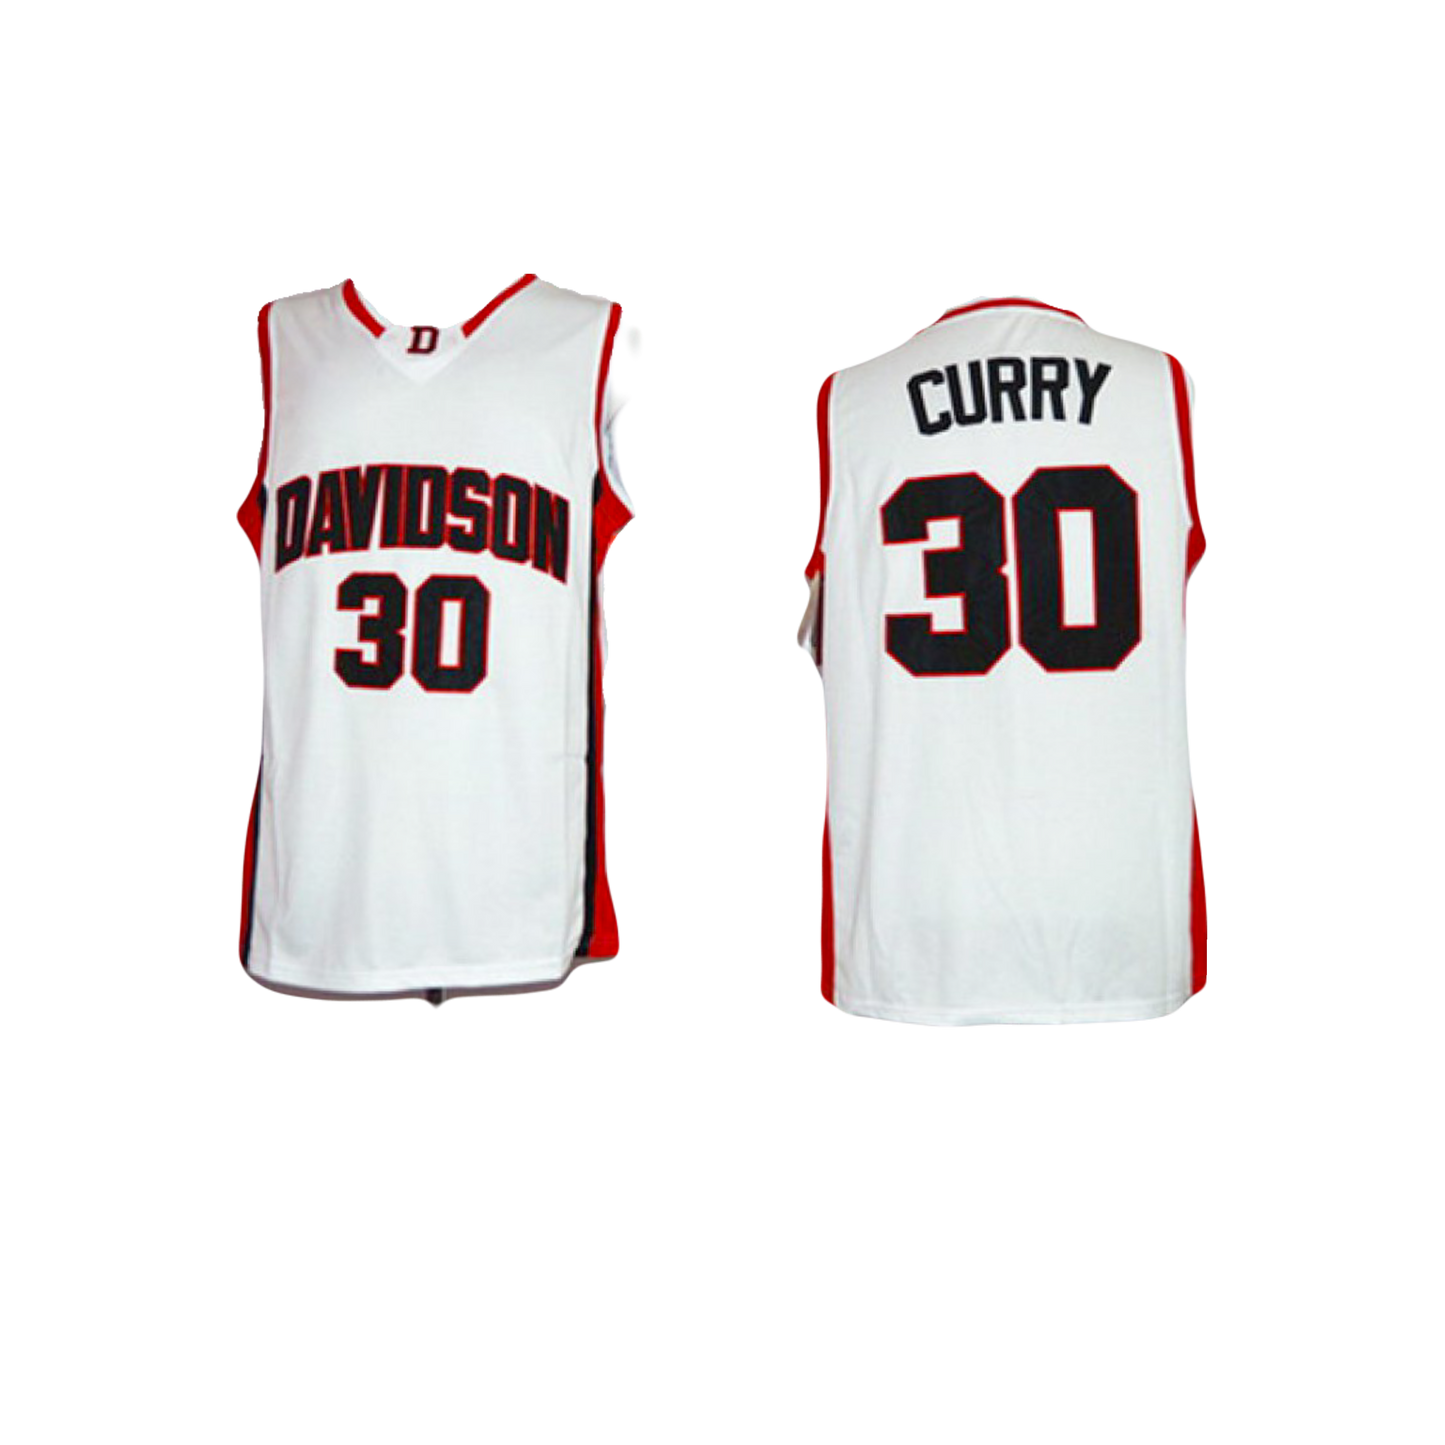 Stephen Curry Davidson 2007 NCAA College Basketball Burnt Orange Jersey